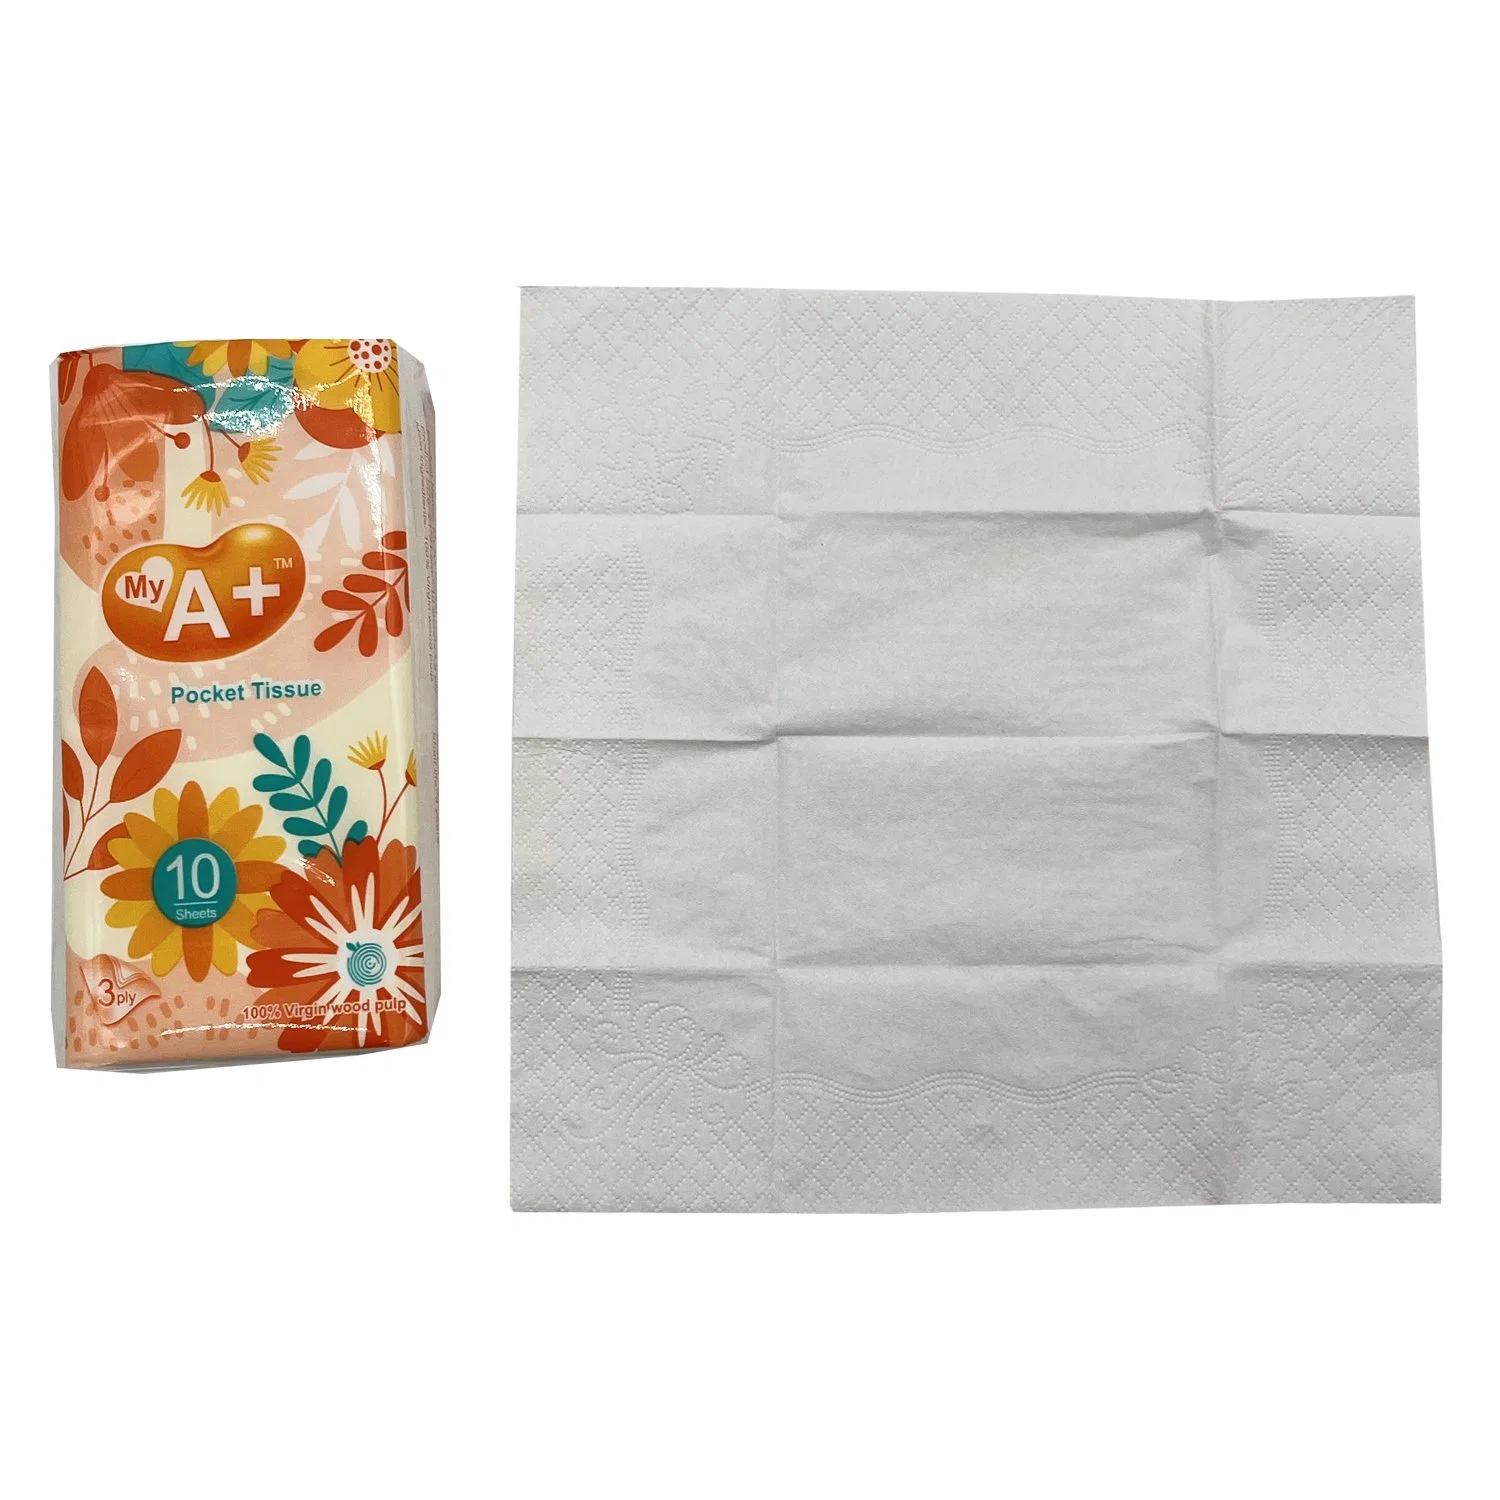 100% Virgin Wood Pulp 3ply Handkerchief Tissue OEM Customized Brand Pocket Tissue Paper